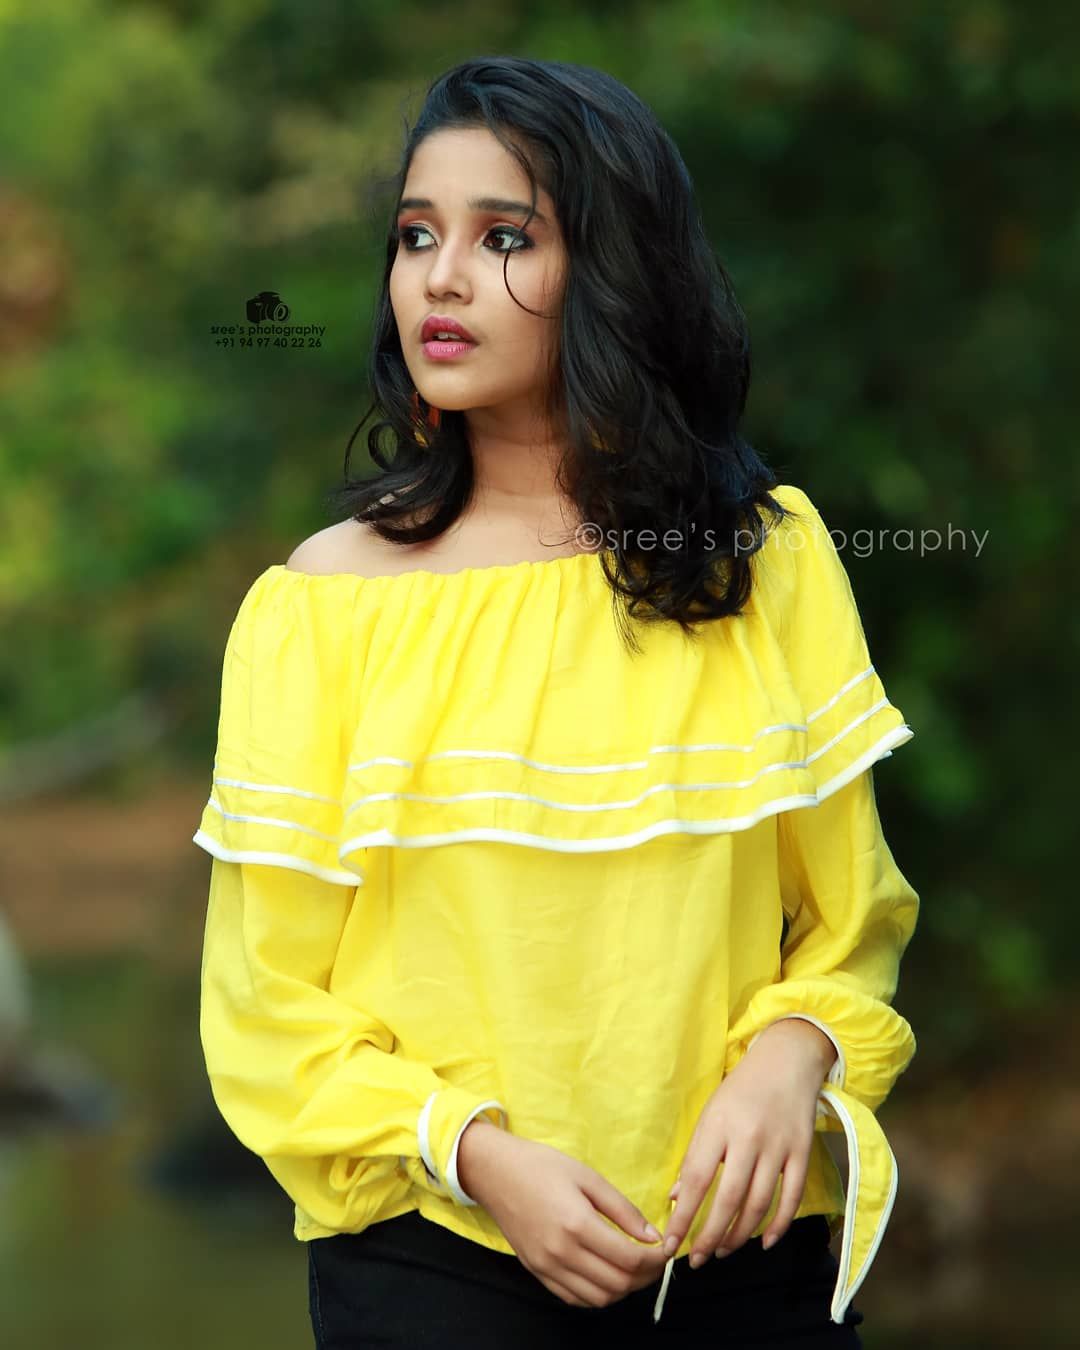 1080x1350 Full Hd Wallpaper Child Actress Anikha Surendran Photoshoot Stills Stylish Girl Image Beauty Full Girl Child Actresses